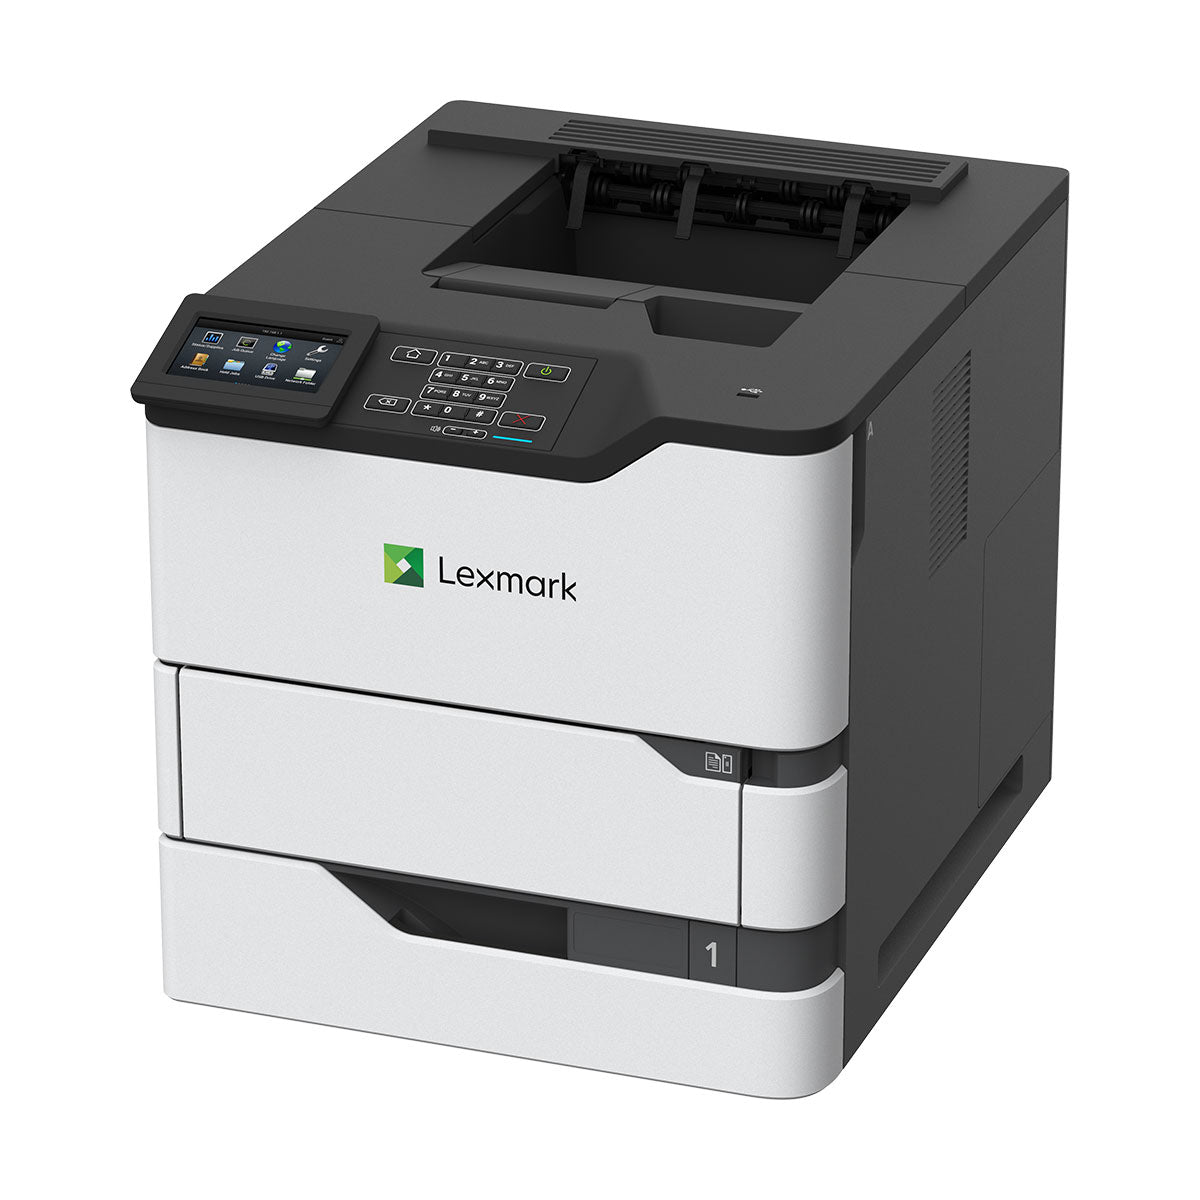 Lexmark M5255 Monochrome A4 Laser Printer